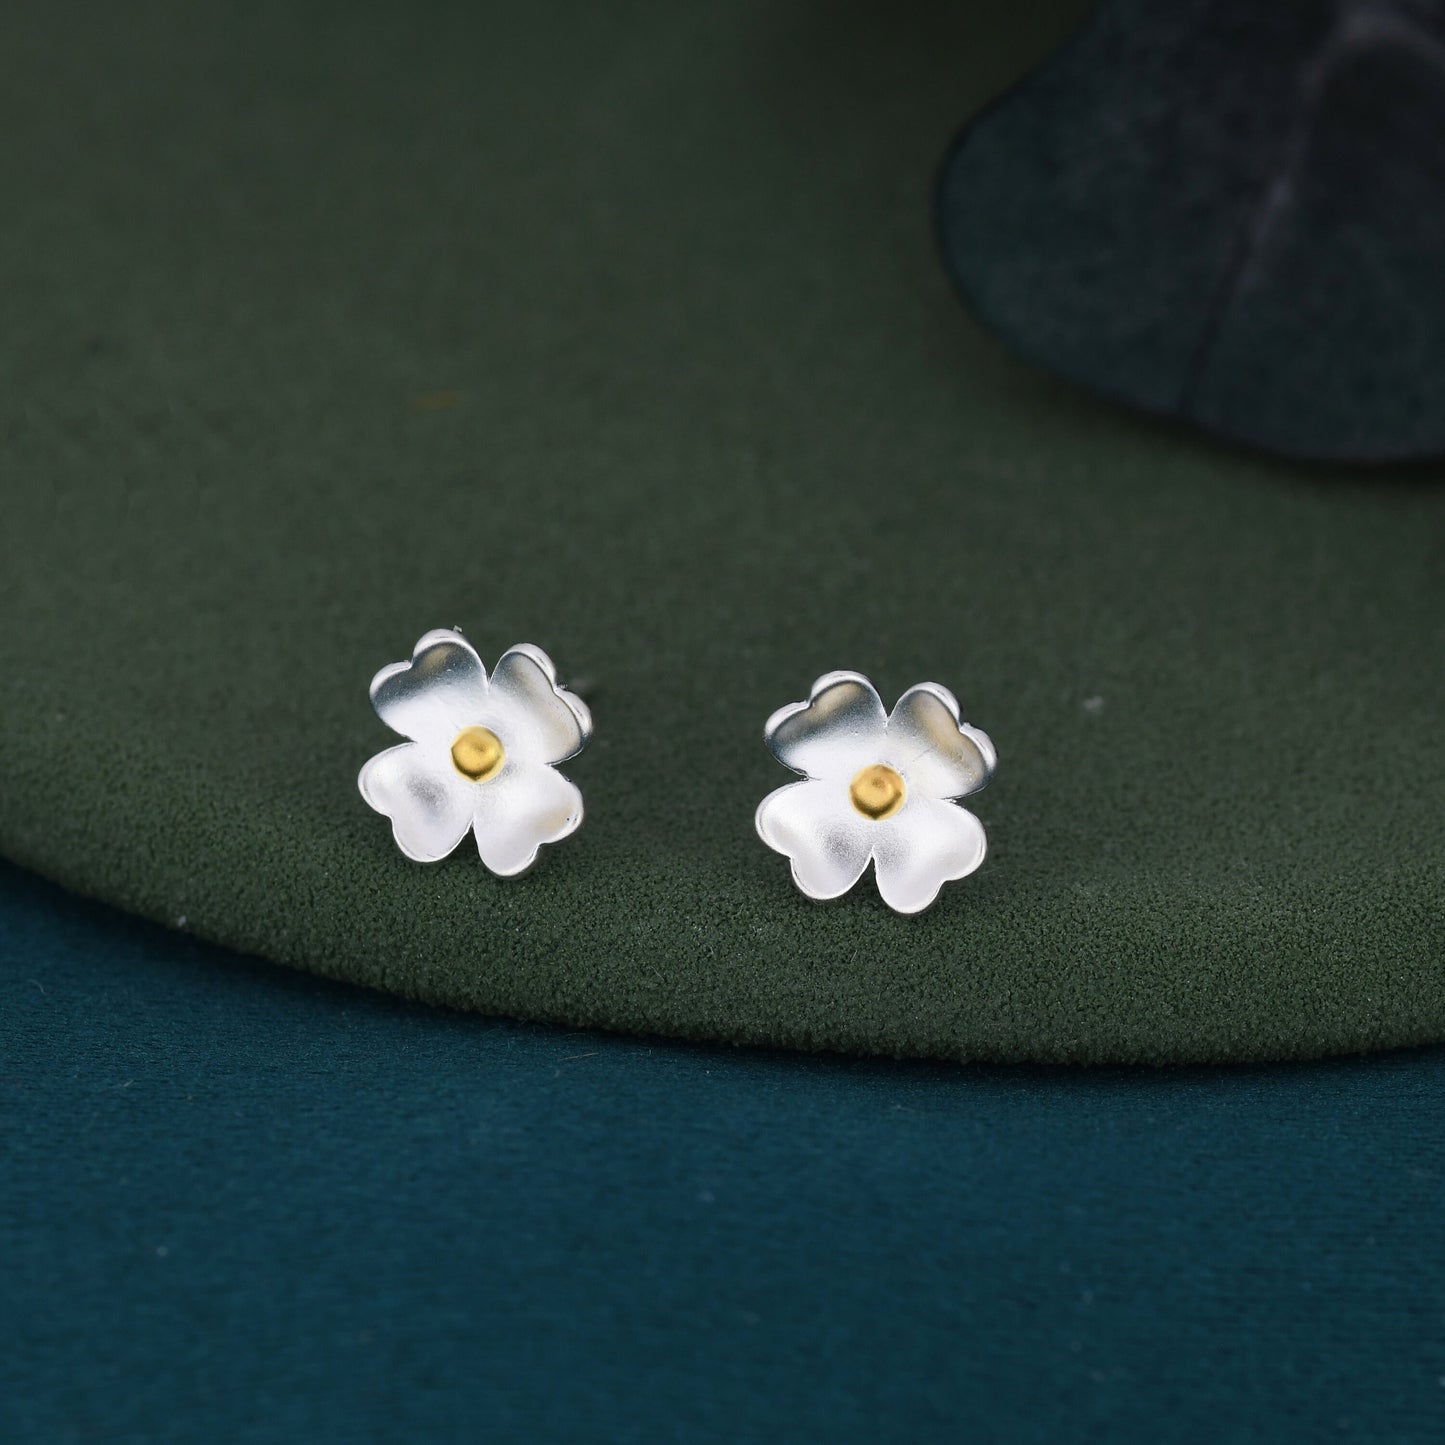 Buttercup Flower Stud Earrings in Sterling Silver, Blossom Earrings, Sand Blasted Finish, Nature Inspired Earrings